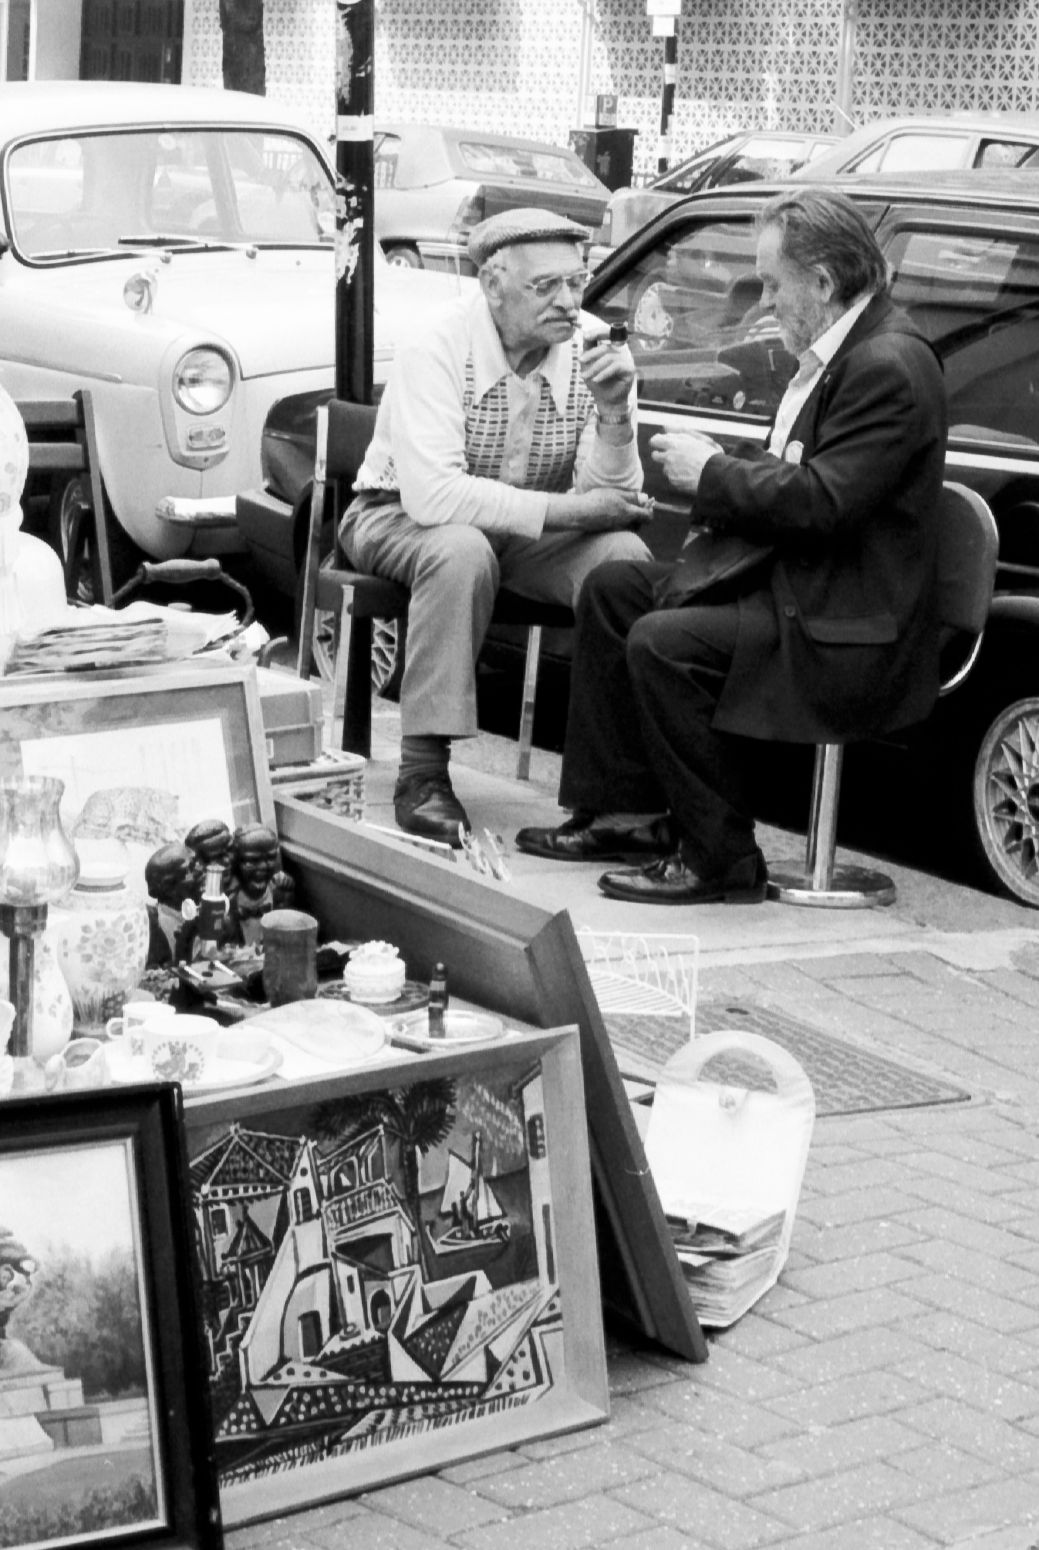 Sitting. Portobello Market, London, England. April 2000